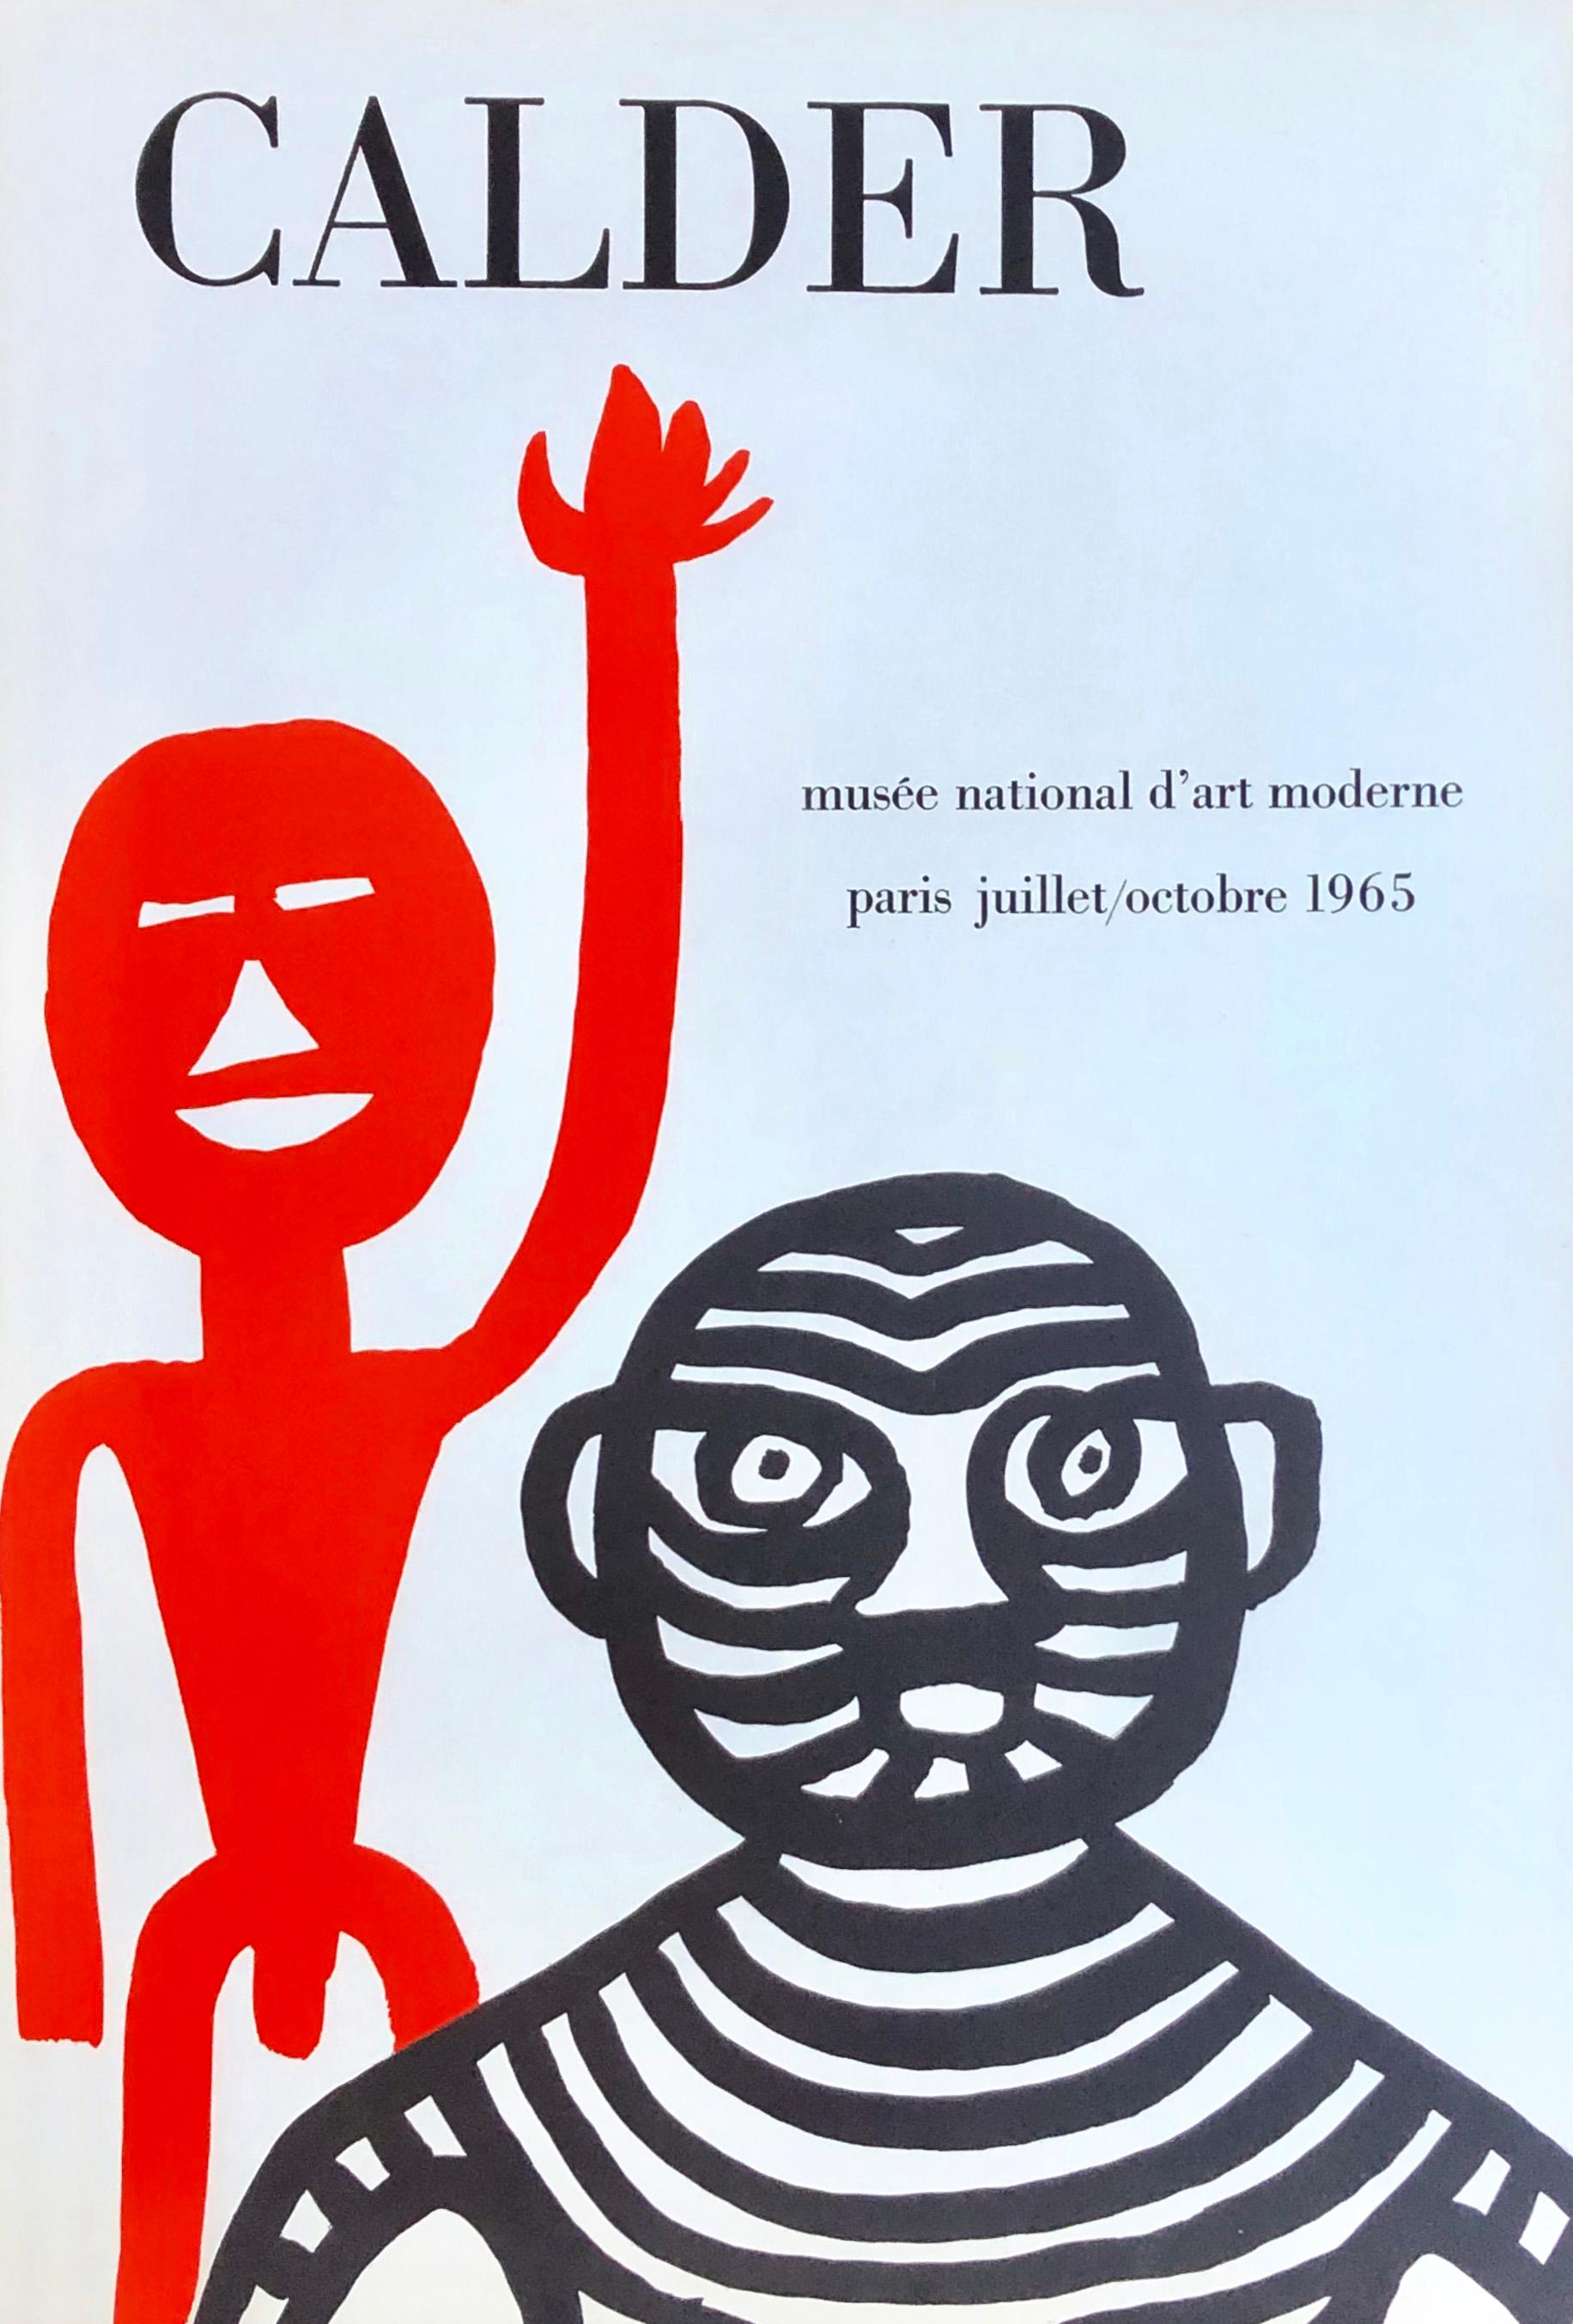 Original Alexander Calder Musée national d'art moderne Paris 1965 exhibition poster:

Offset lithograph 
16 x 22.75 inches 
Published by Musée national d'art moderne Paris 1965. 
An original 1st printing in very good condition. 
Unsigned from an